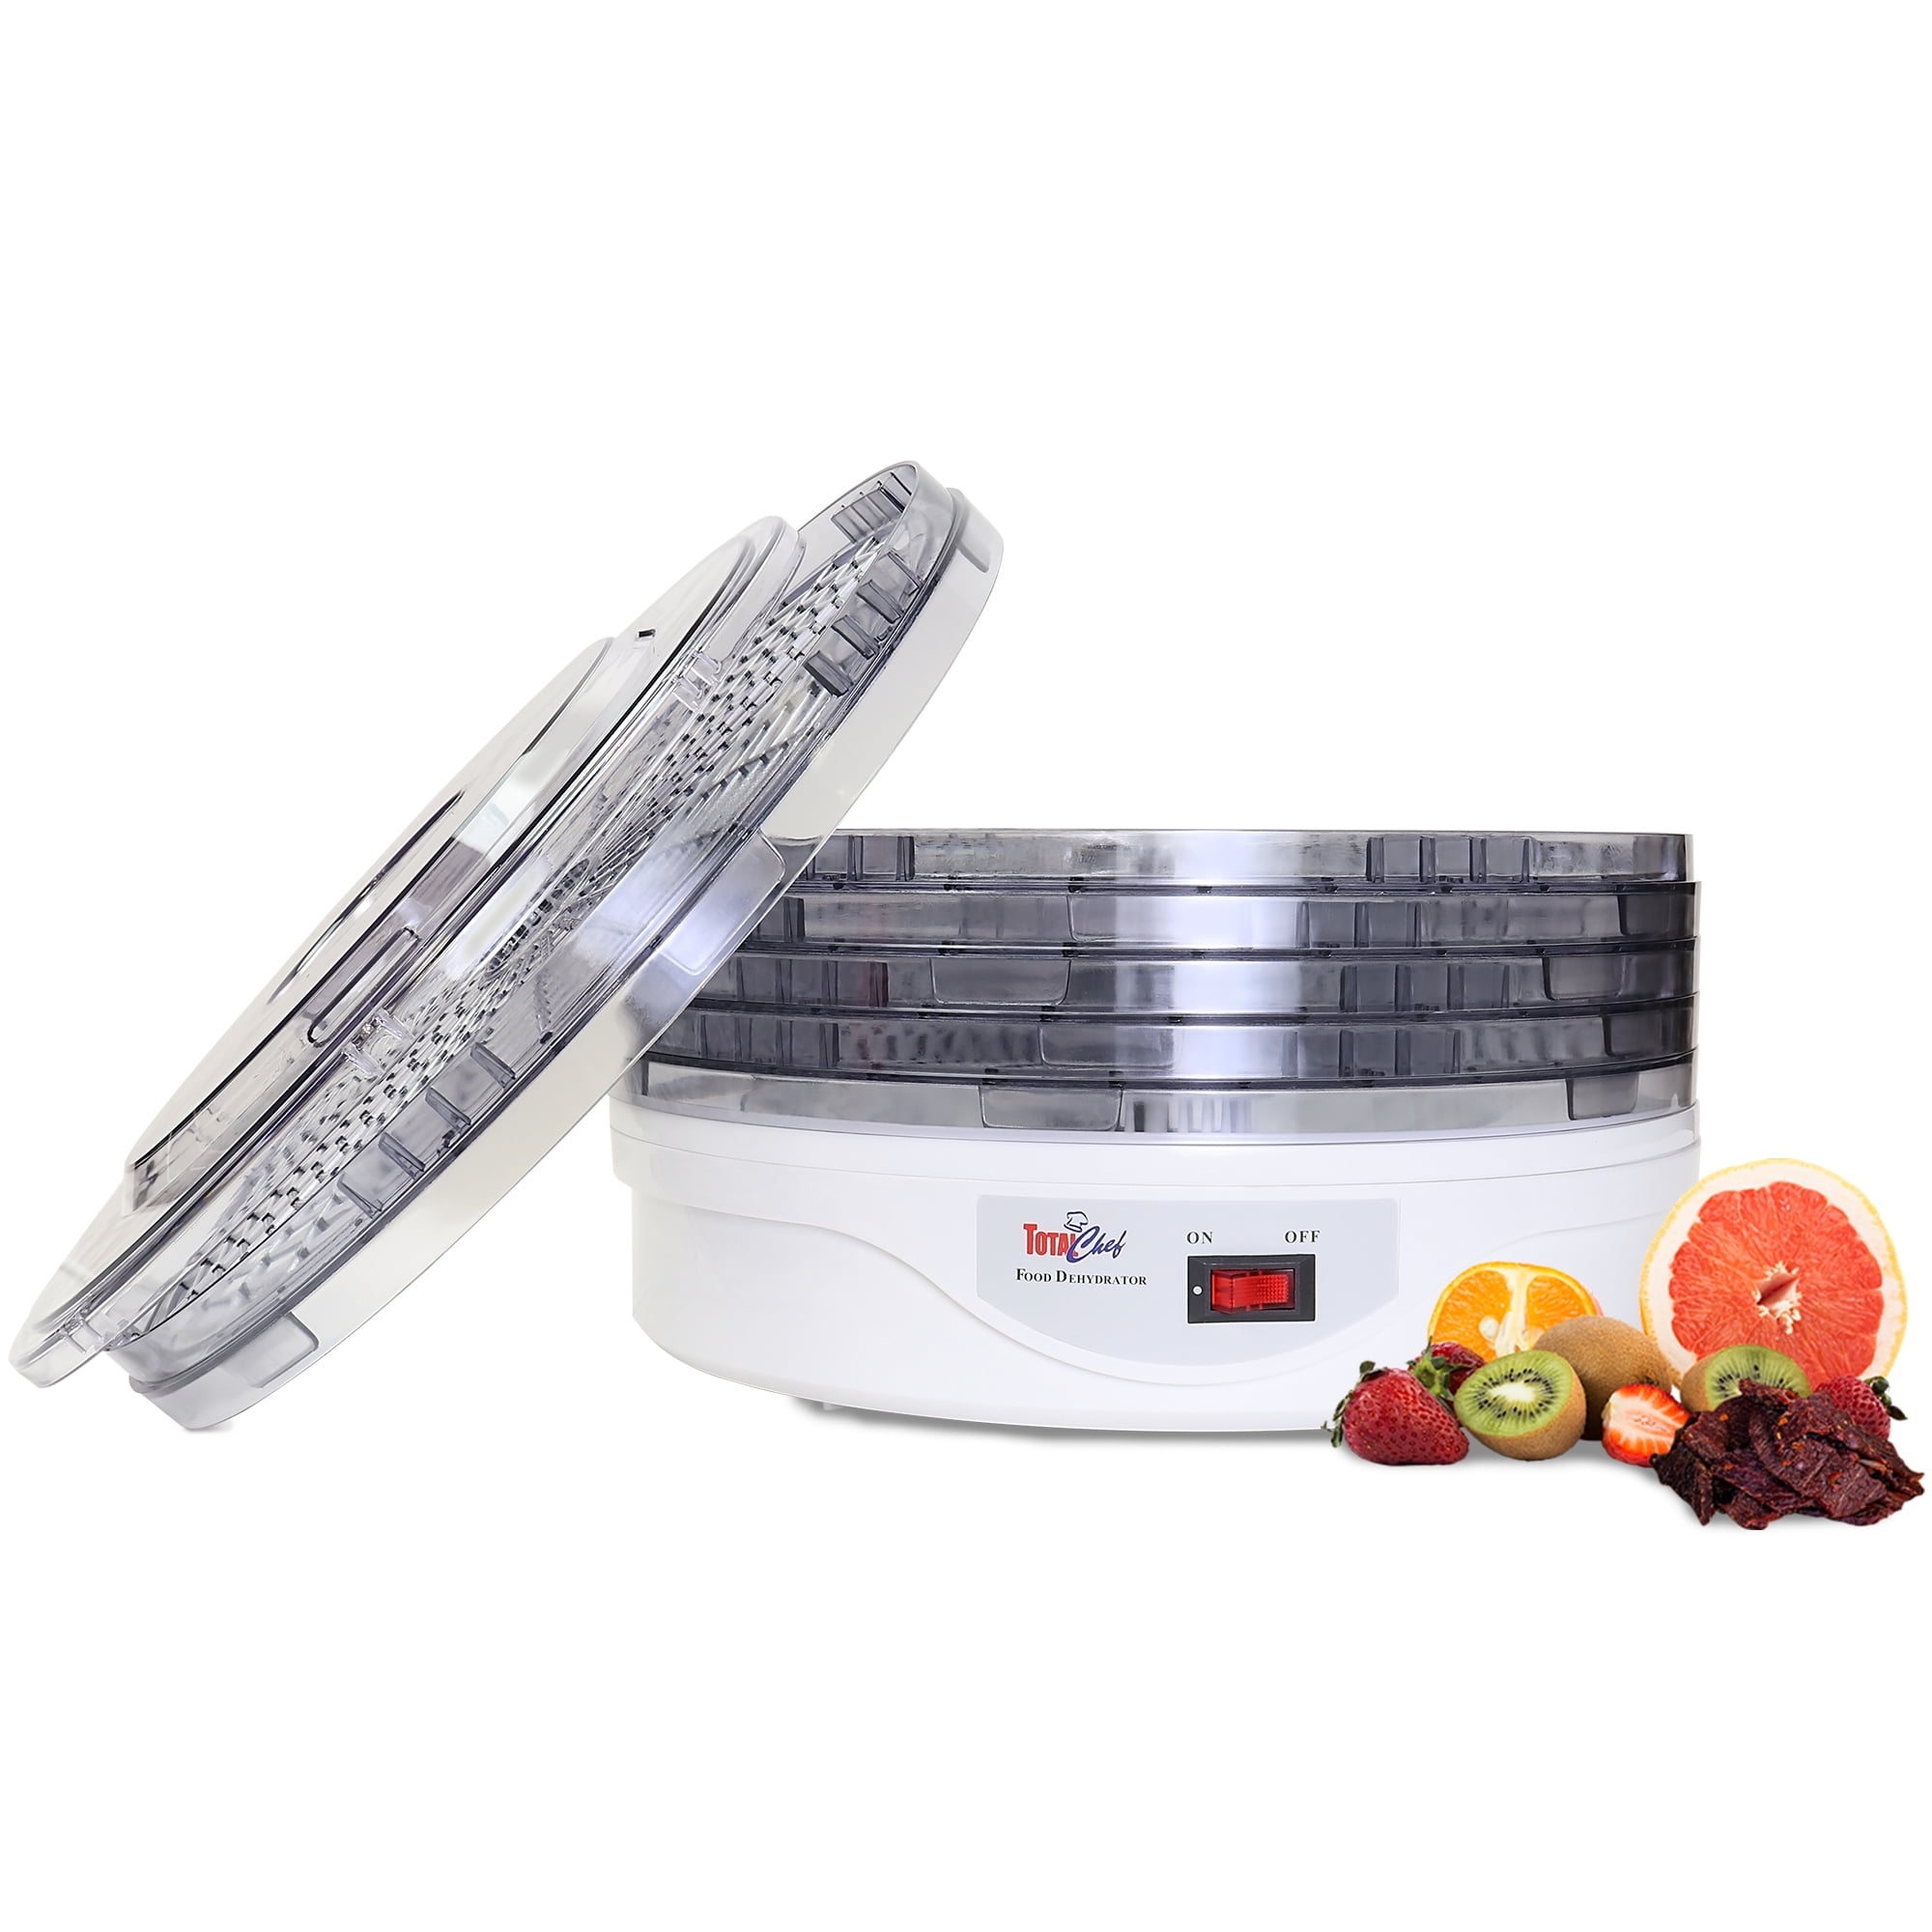 Stainless Steel Food Dehydrator Fruit Vegetable Herb Meat Drying